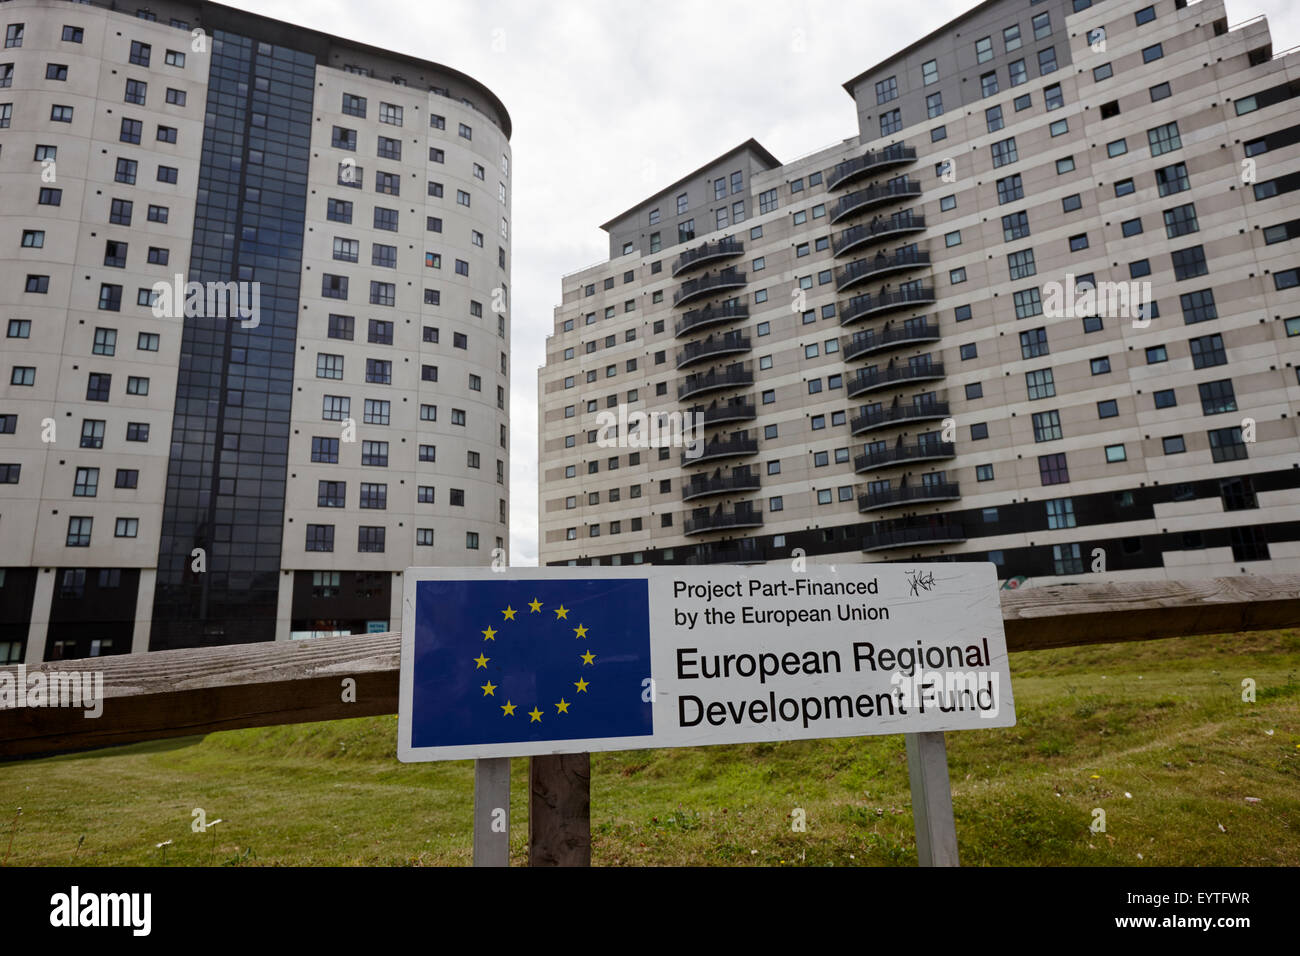 masshouse redevelopment of inner city Birmingham UK part financed by the european regional development fund Stock Photo